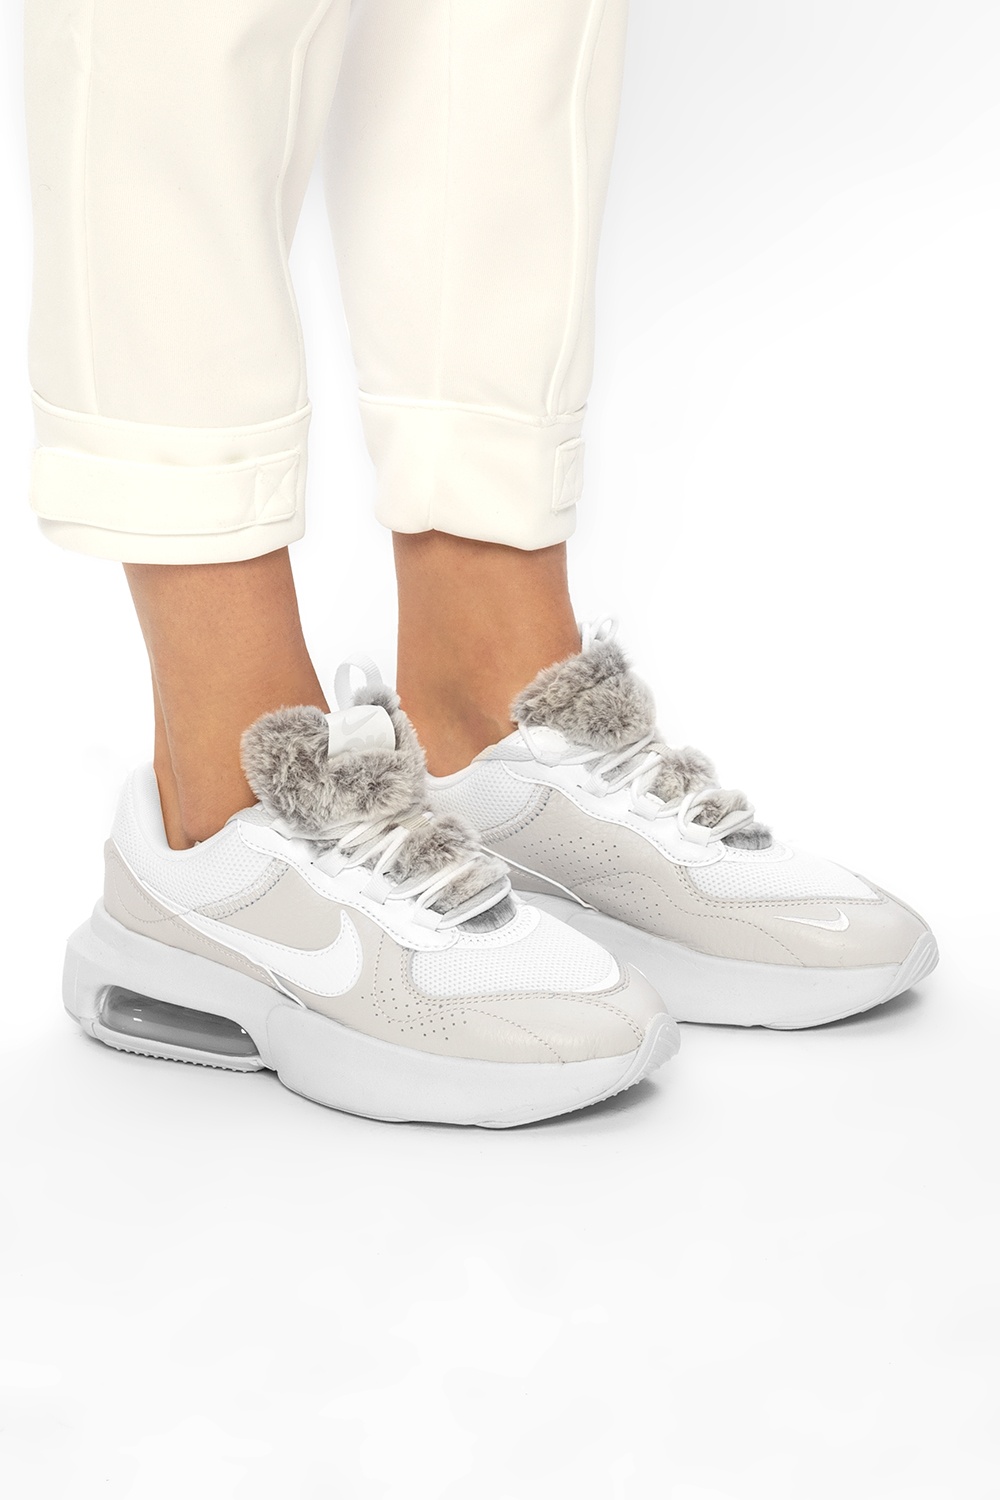 Grey 'Air Max Verona' sneakers Nike - Vitkac Canada